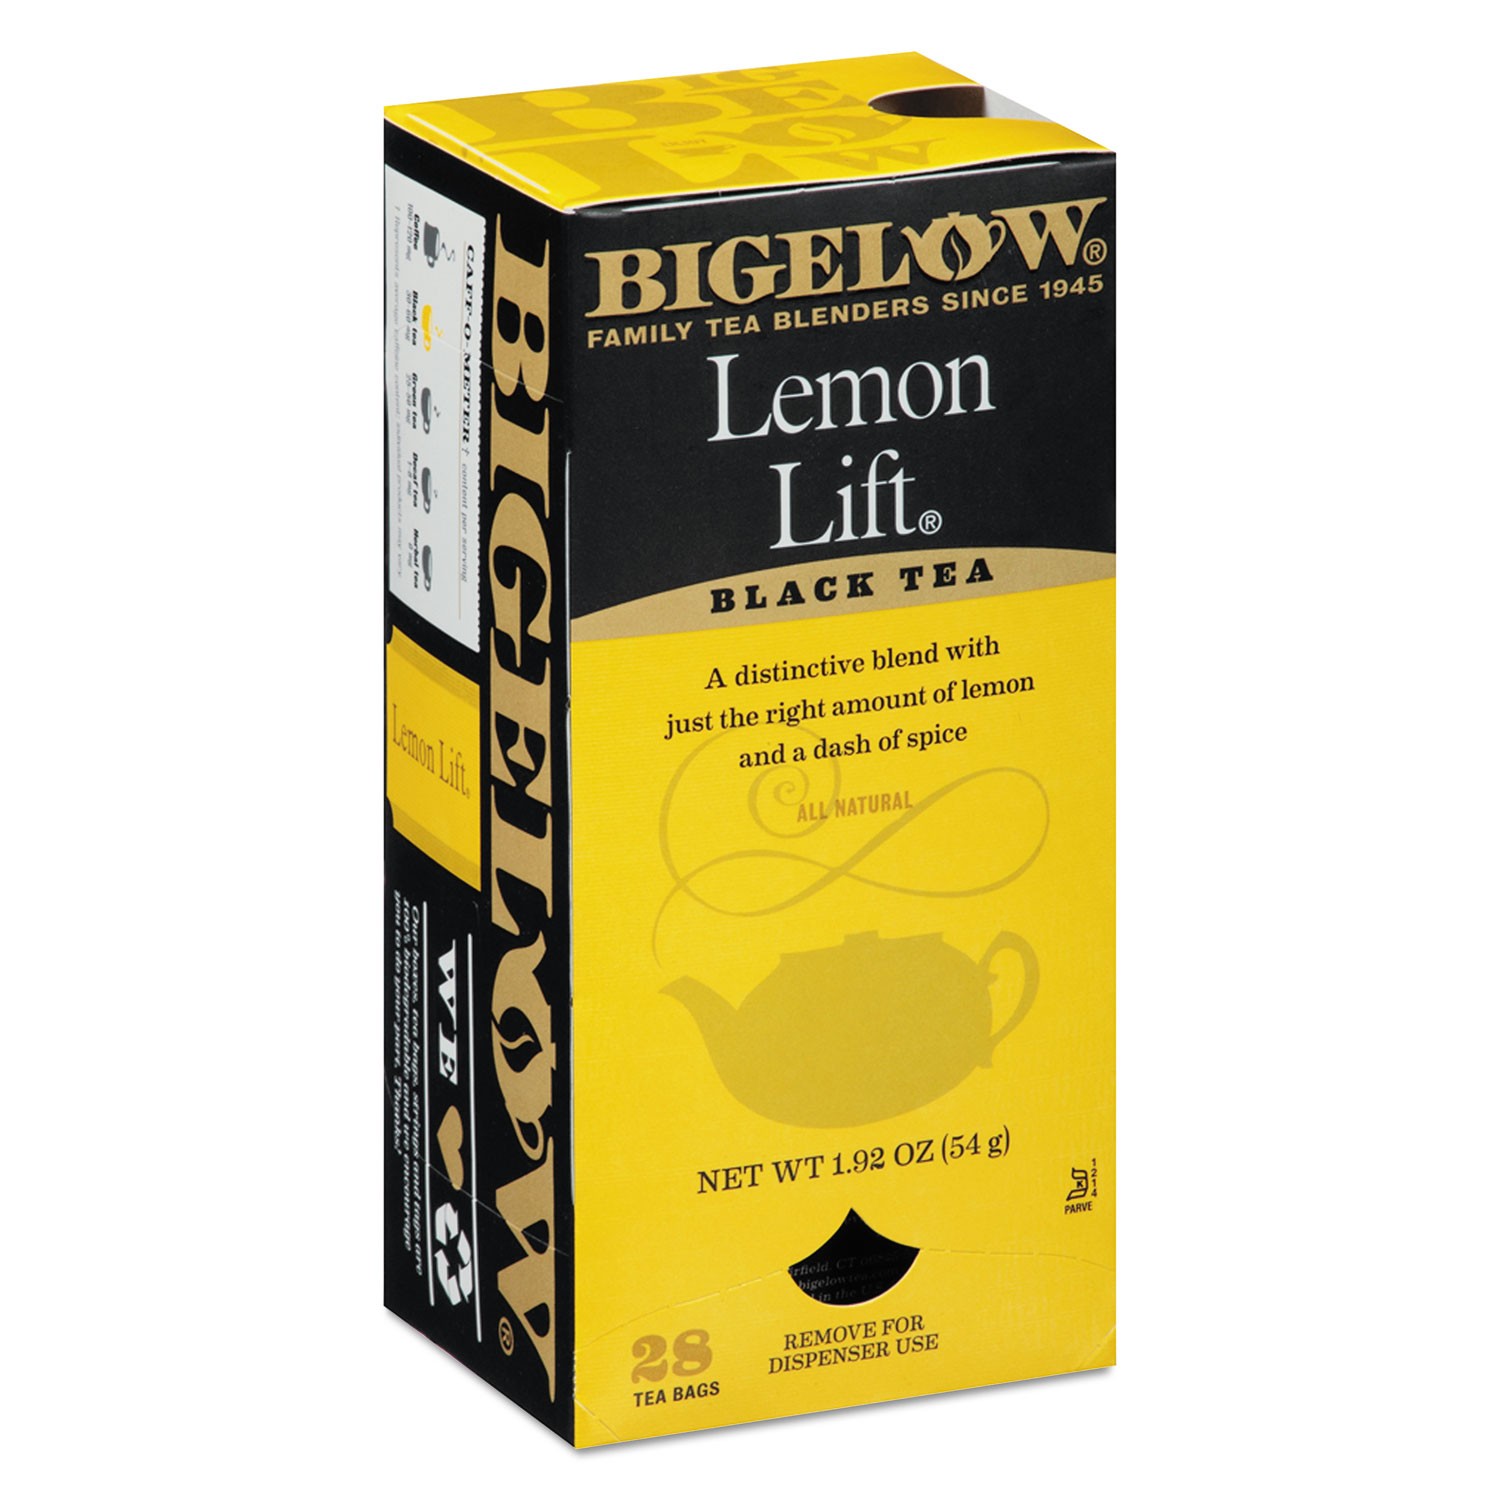 Lemon Lift Black Tea, 28/Box